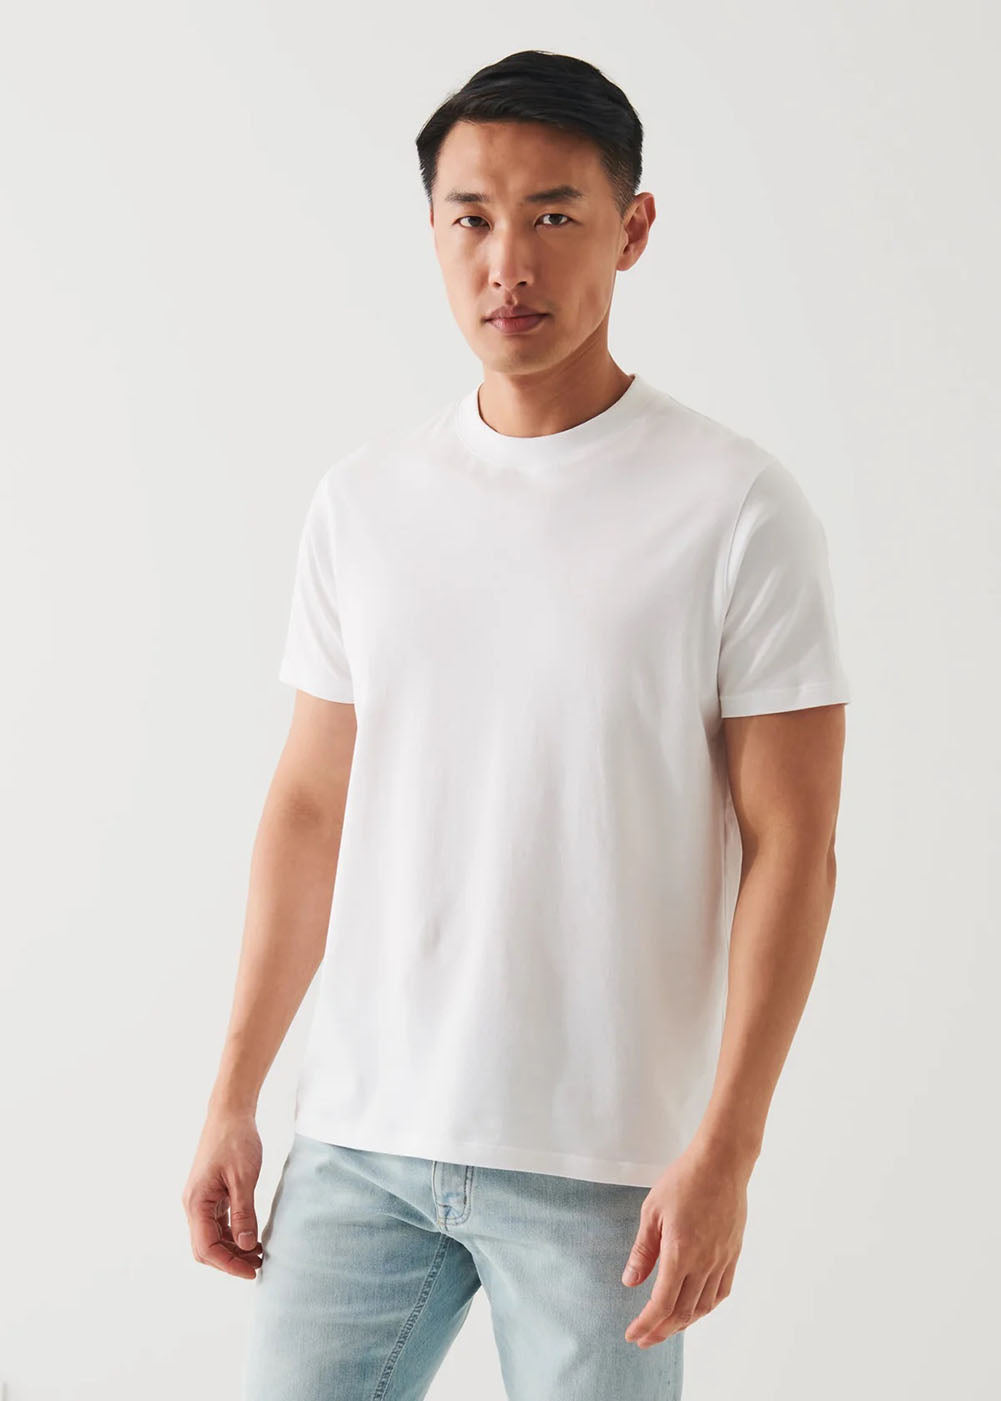 Organic Pima Cotton Short Sleeve Crew T-Shirt - White - Patrick Assaraf - Danali - P92C01V